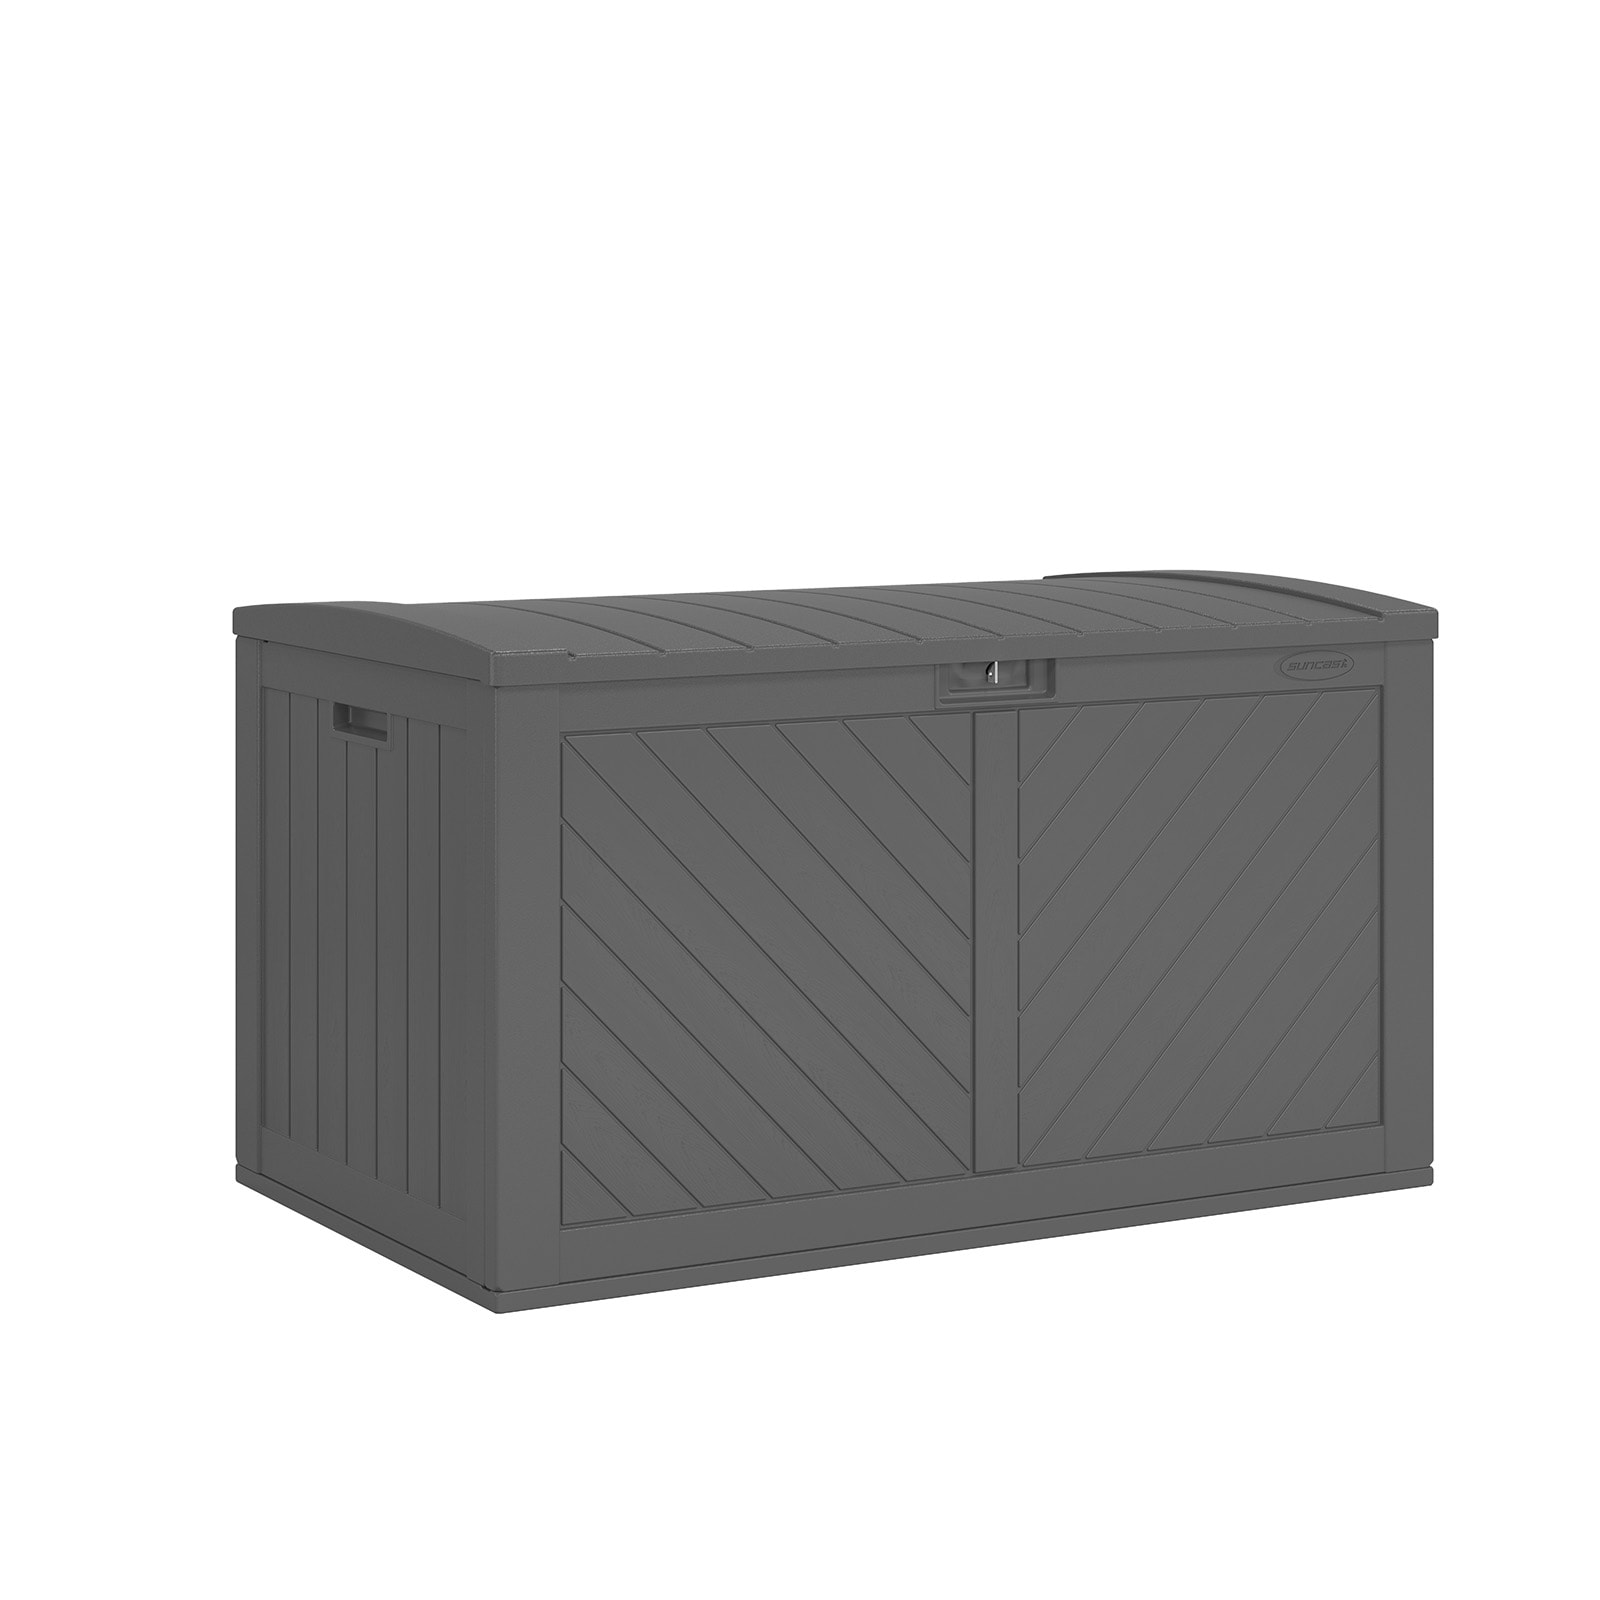 Suncast Java 134 Gal. Resin Wicker Deck Box BMDB134004 - The Home Depot